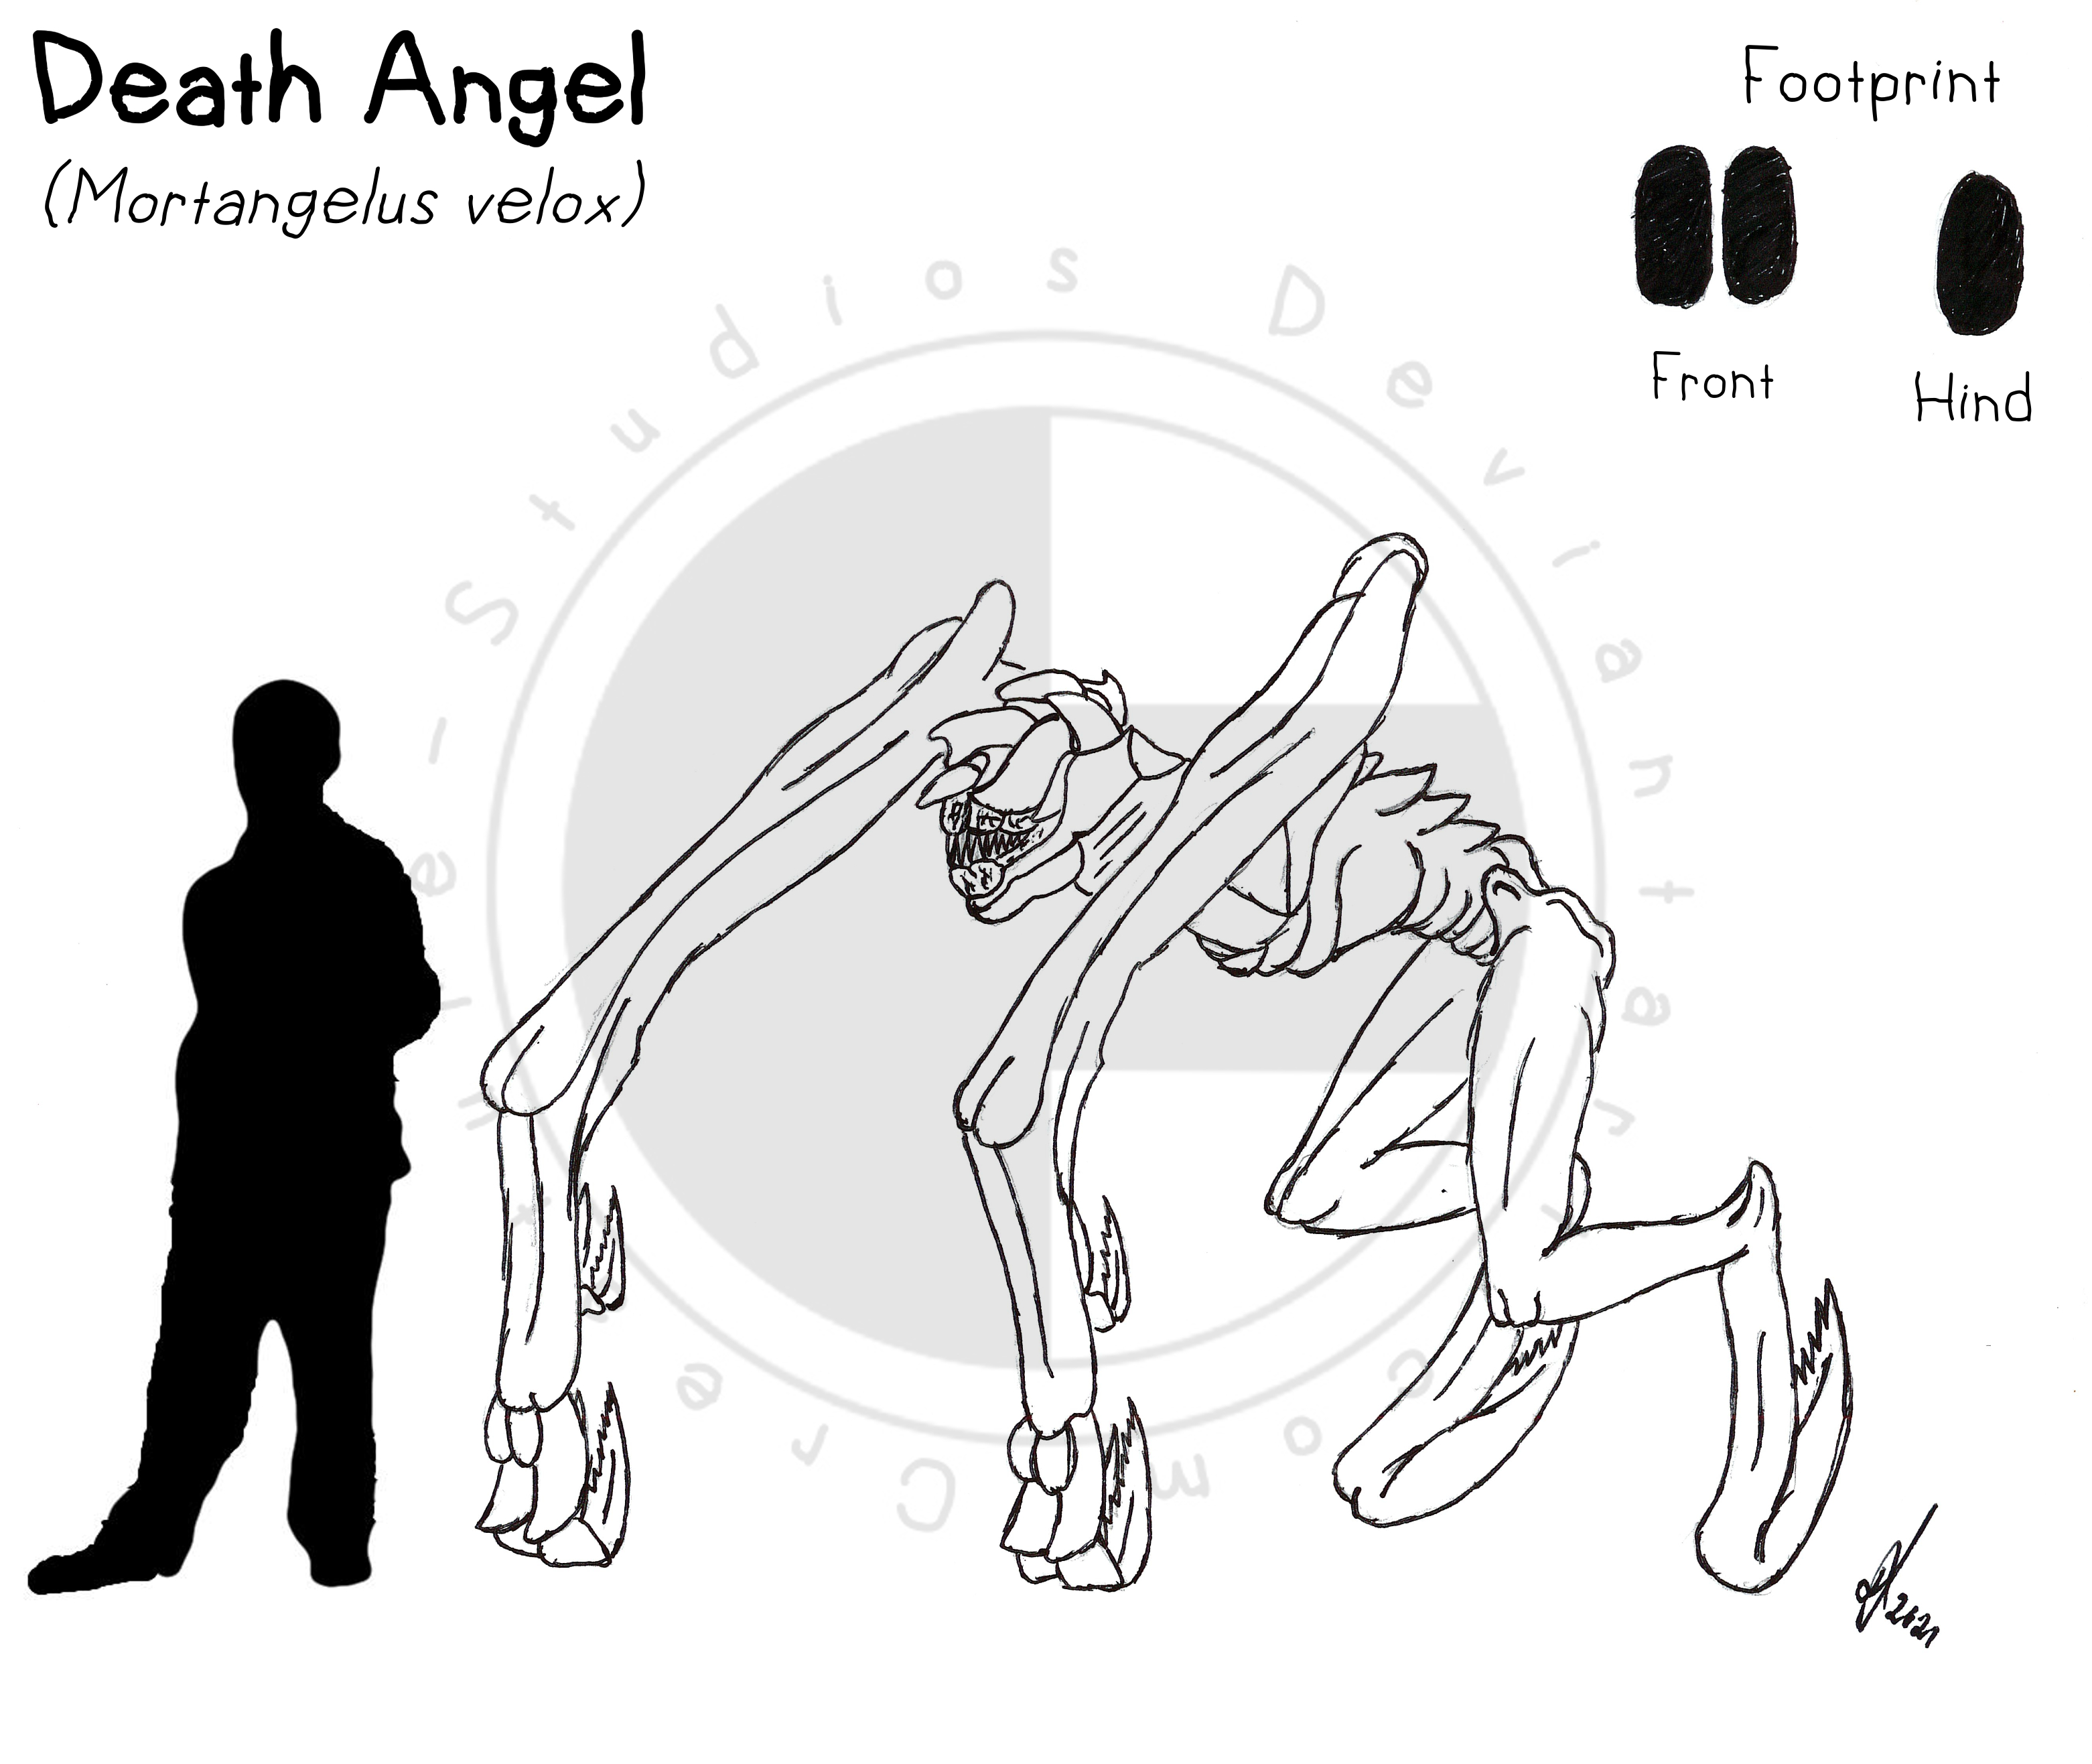 Death Angel by Creature-Studios on DeviantArt